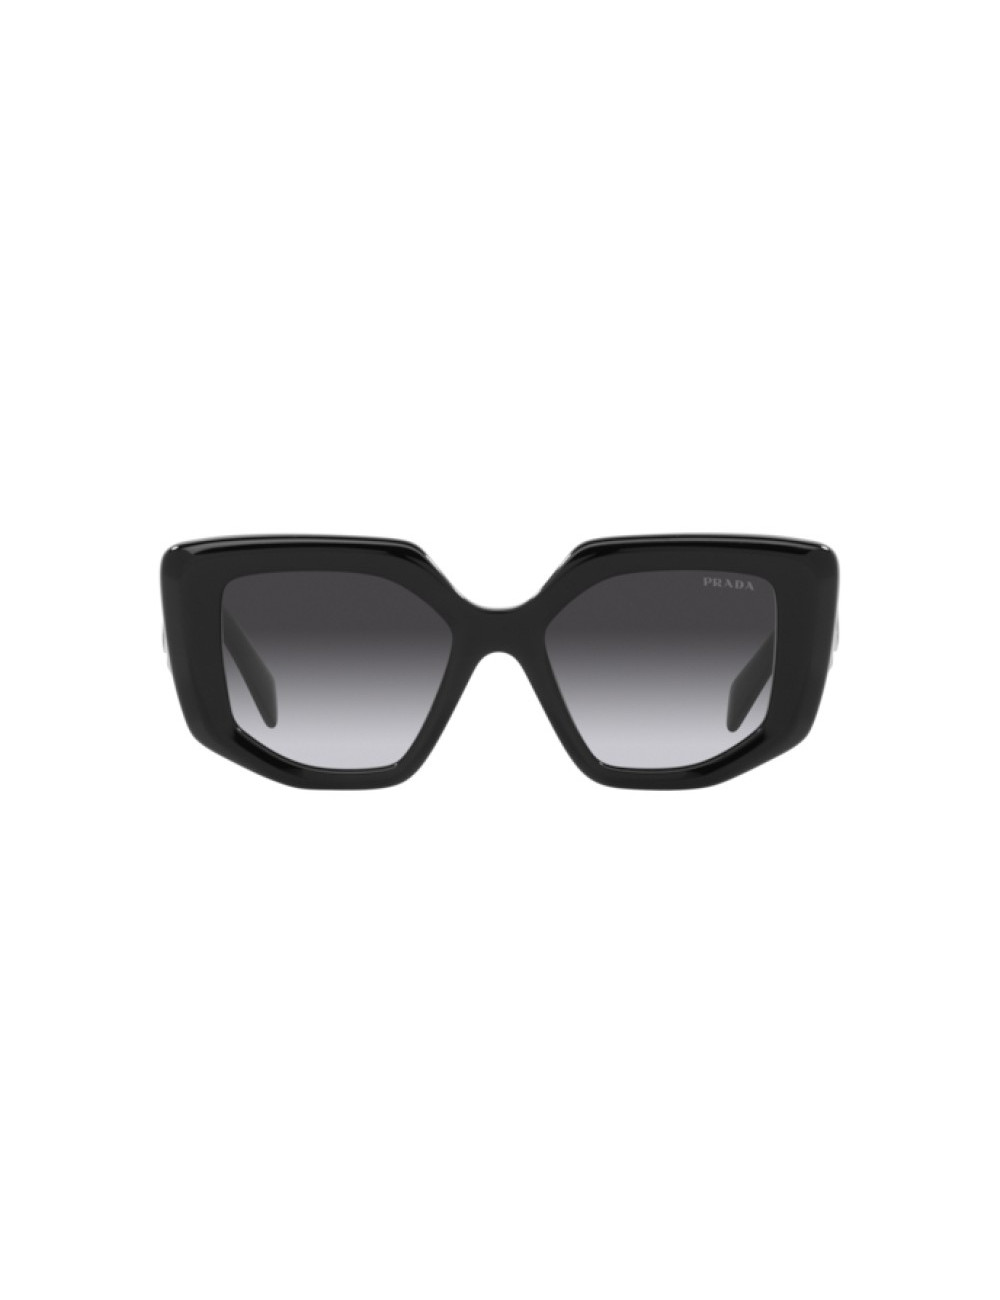 Mary Katrantzou's Alphabetical Tote Bags, and Prada's New Wooden Sunglasses  | Wooden sunglasses, Sunglasses, Prada glasses